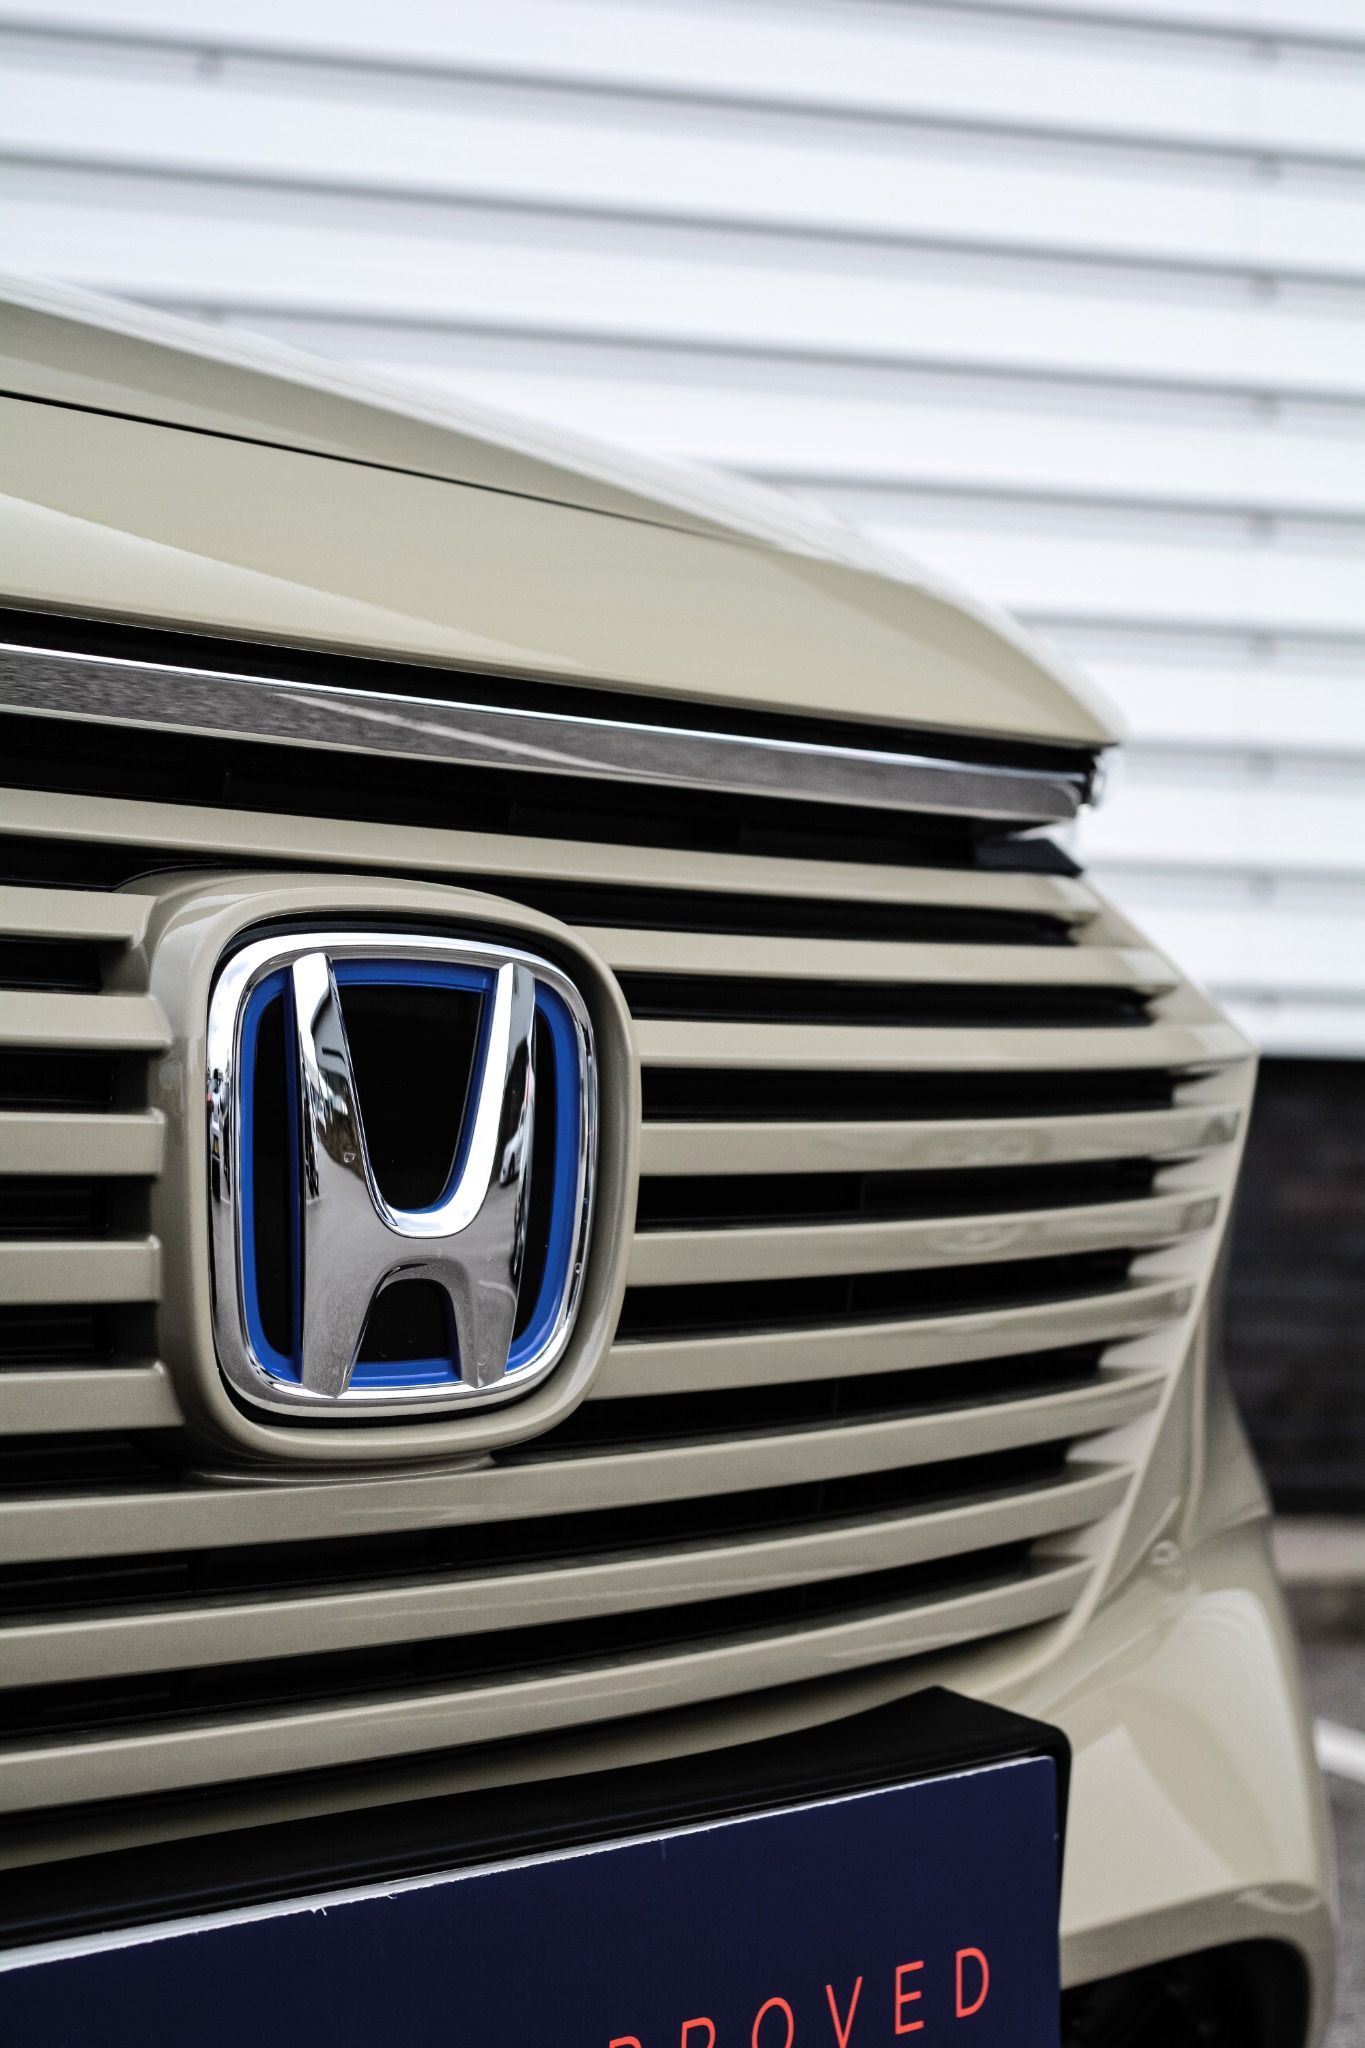 Honda HR-V exterior grill and badge close up